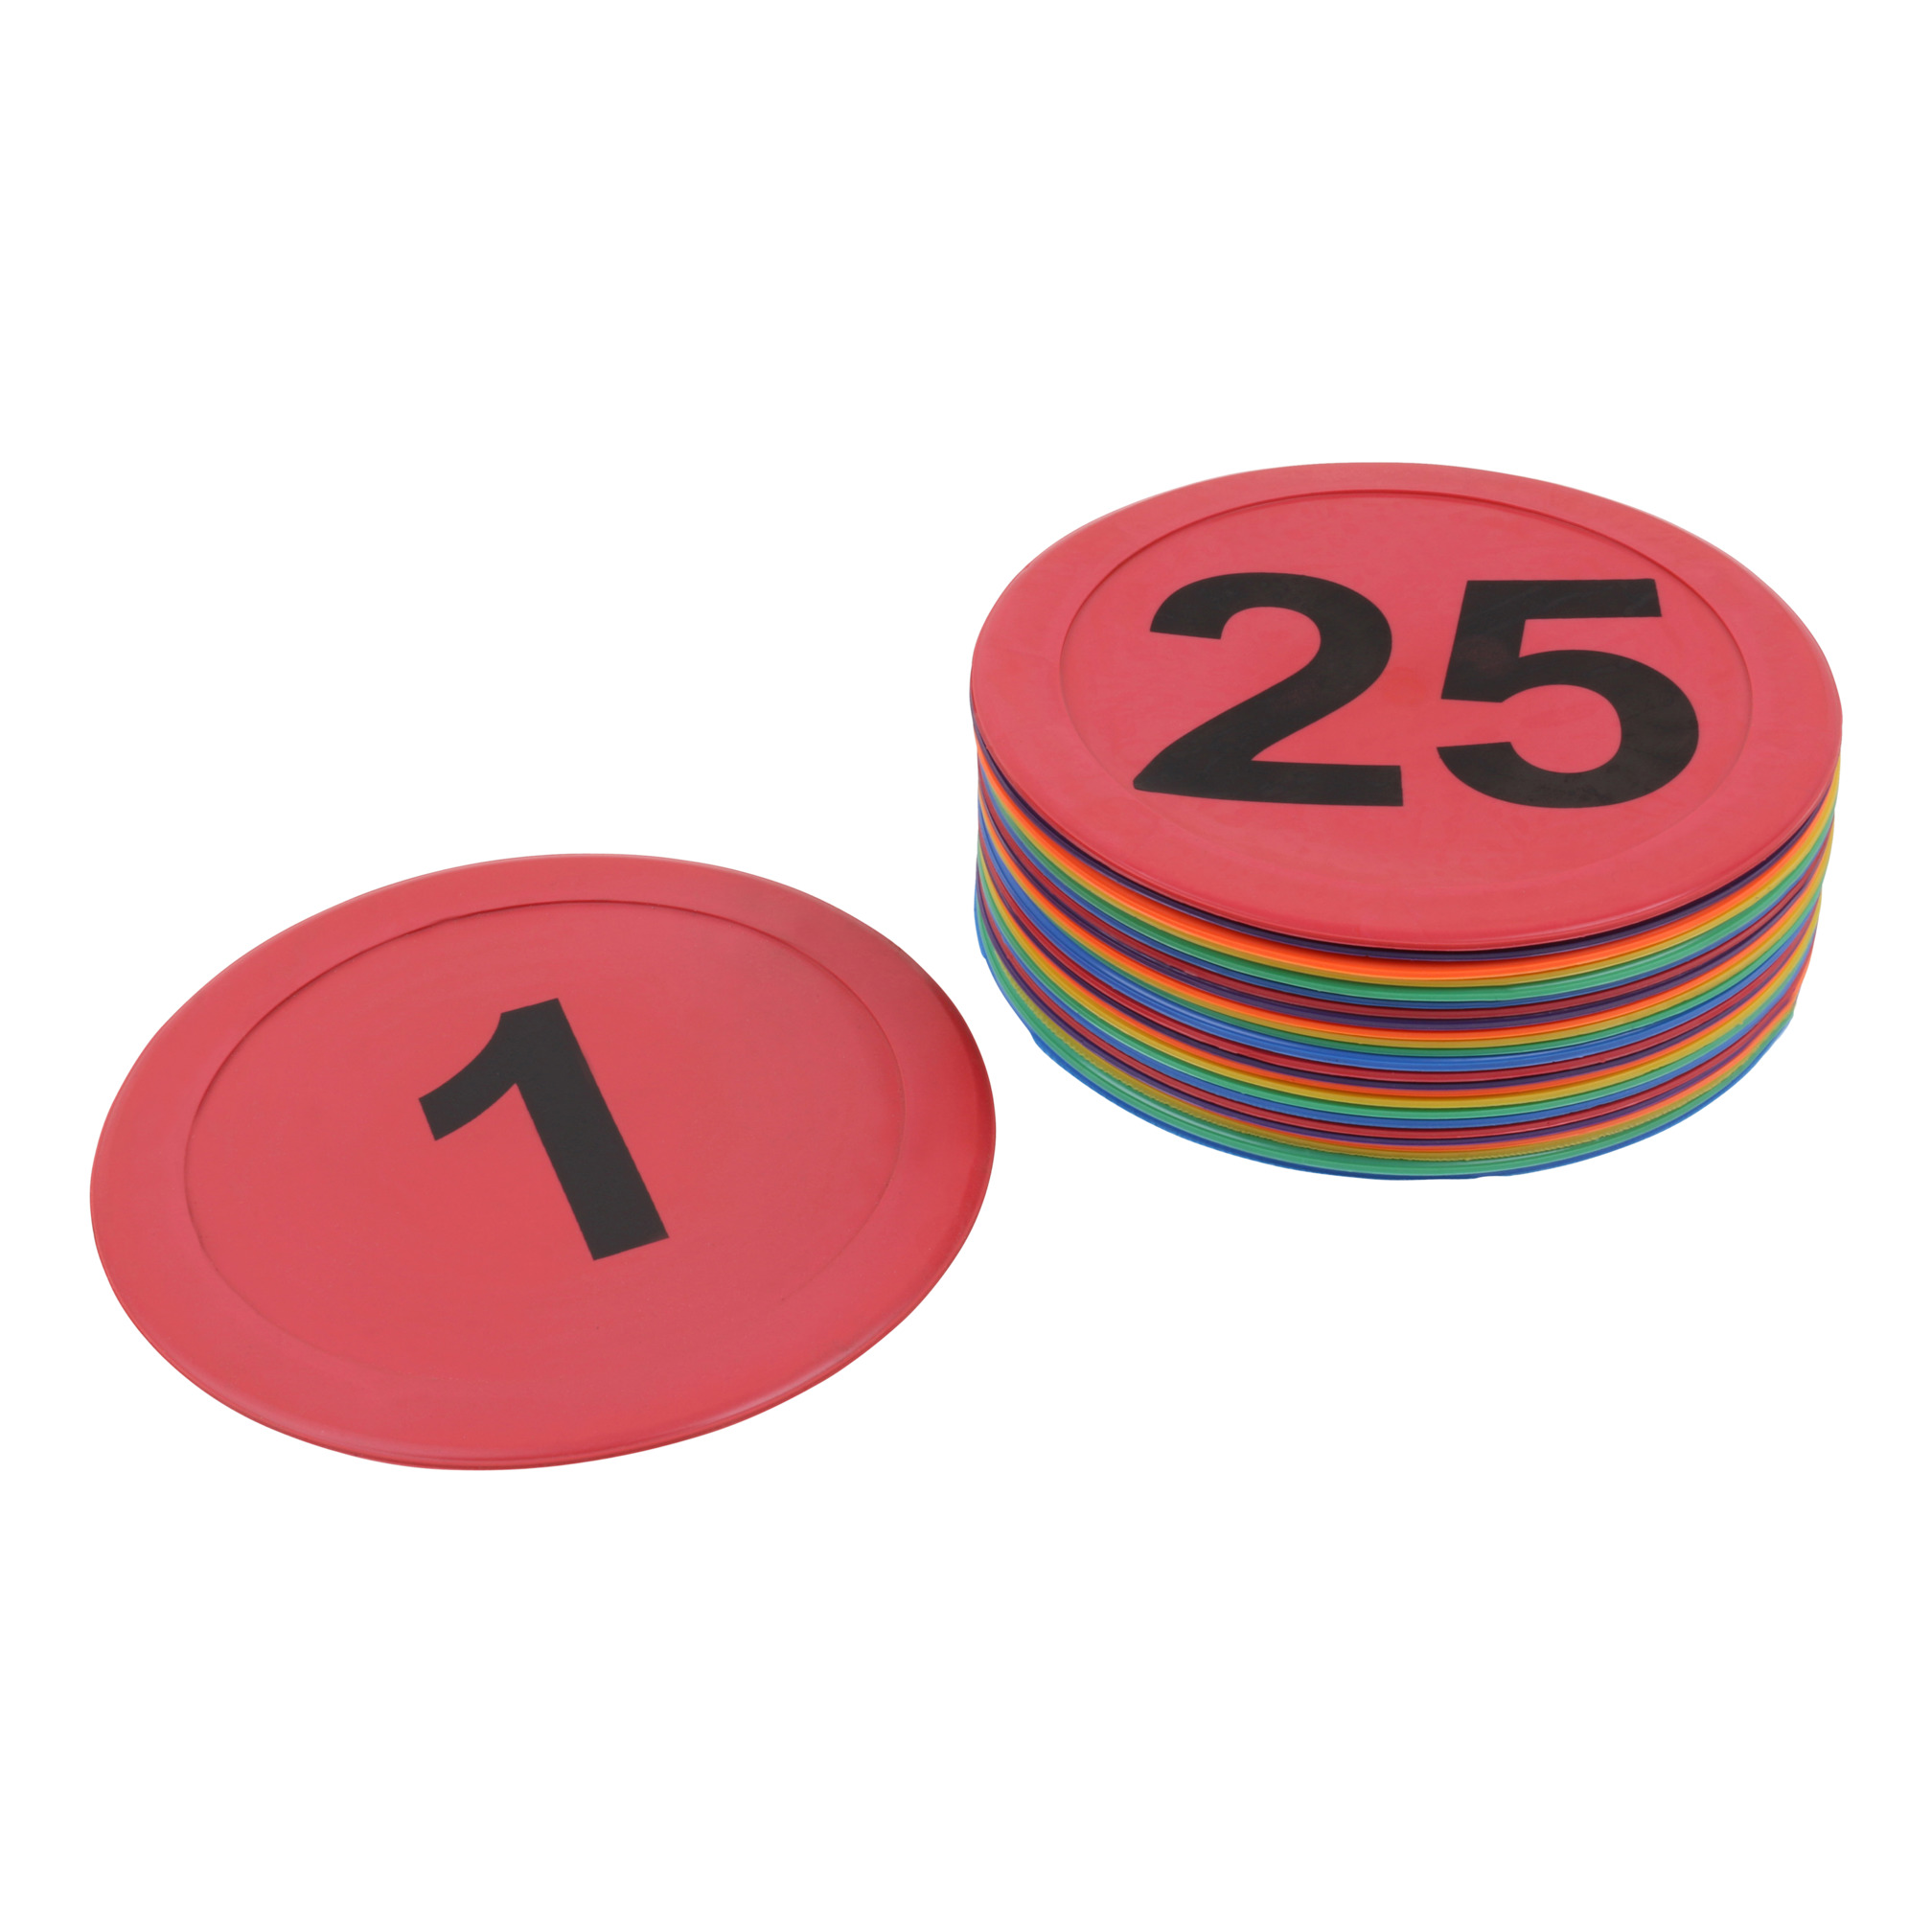 Numbered marking discs